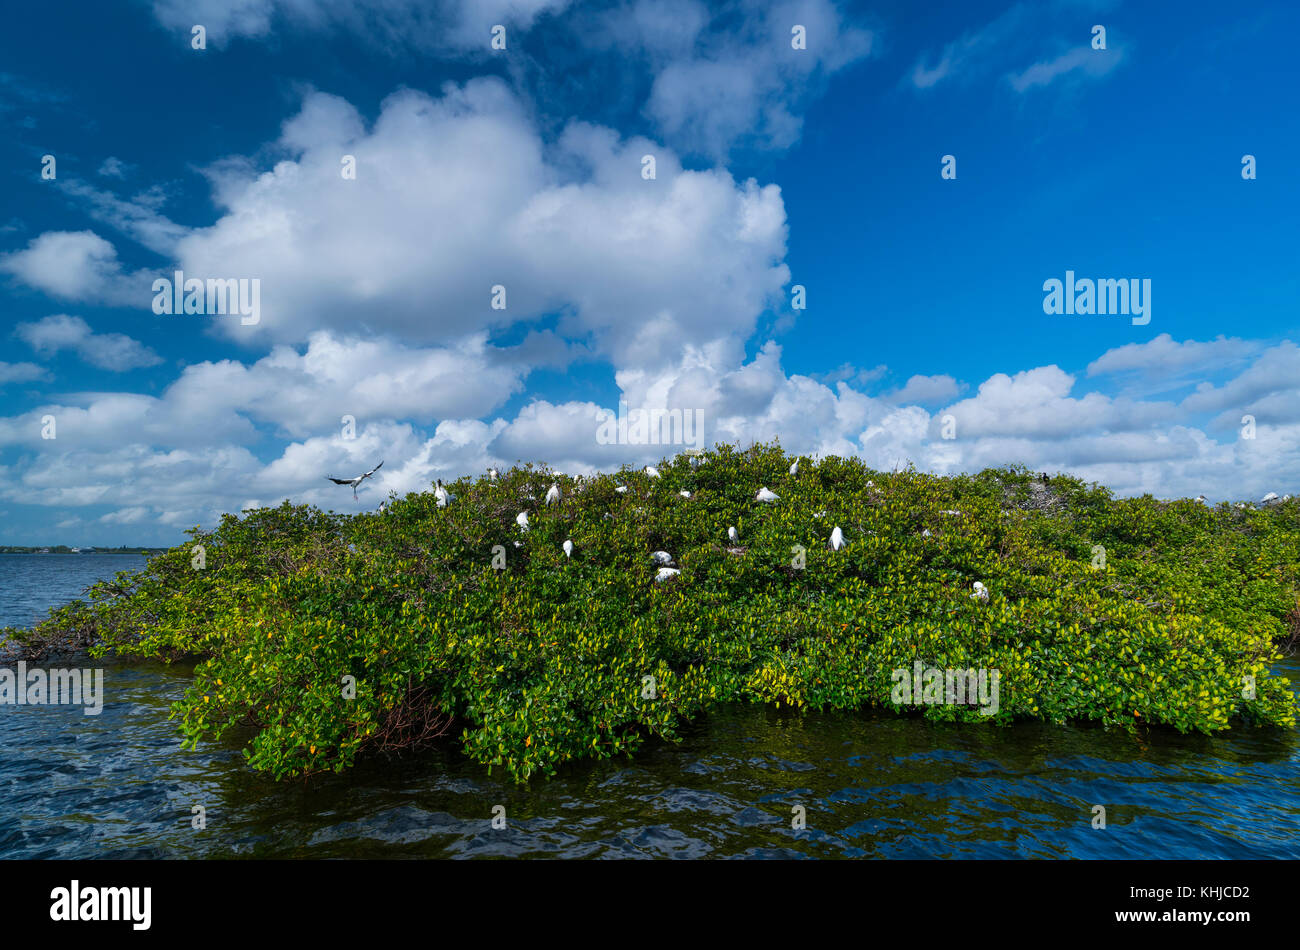 WOOD STORK (Mycteria americana), Stork family, Everglades, Florida, Usa, América Stock Photo